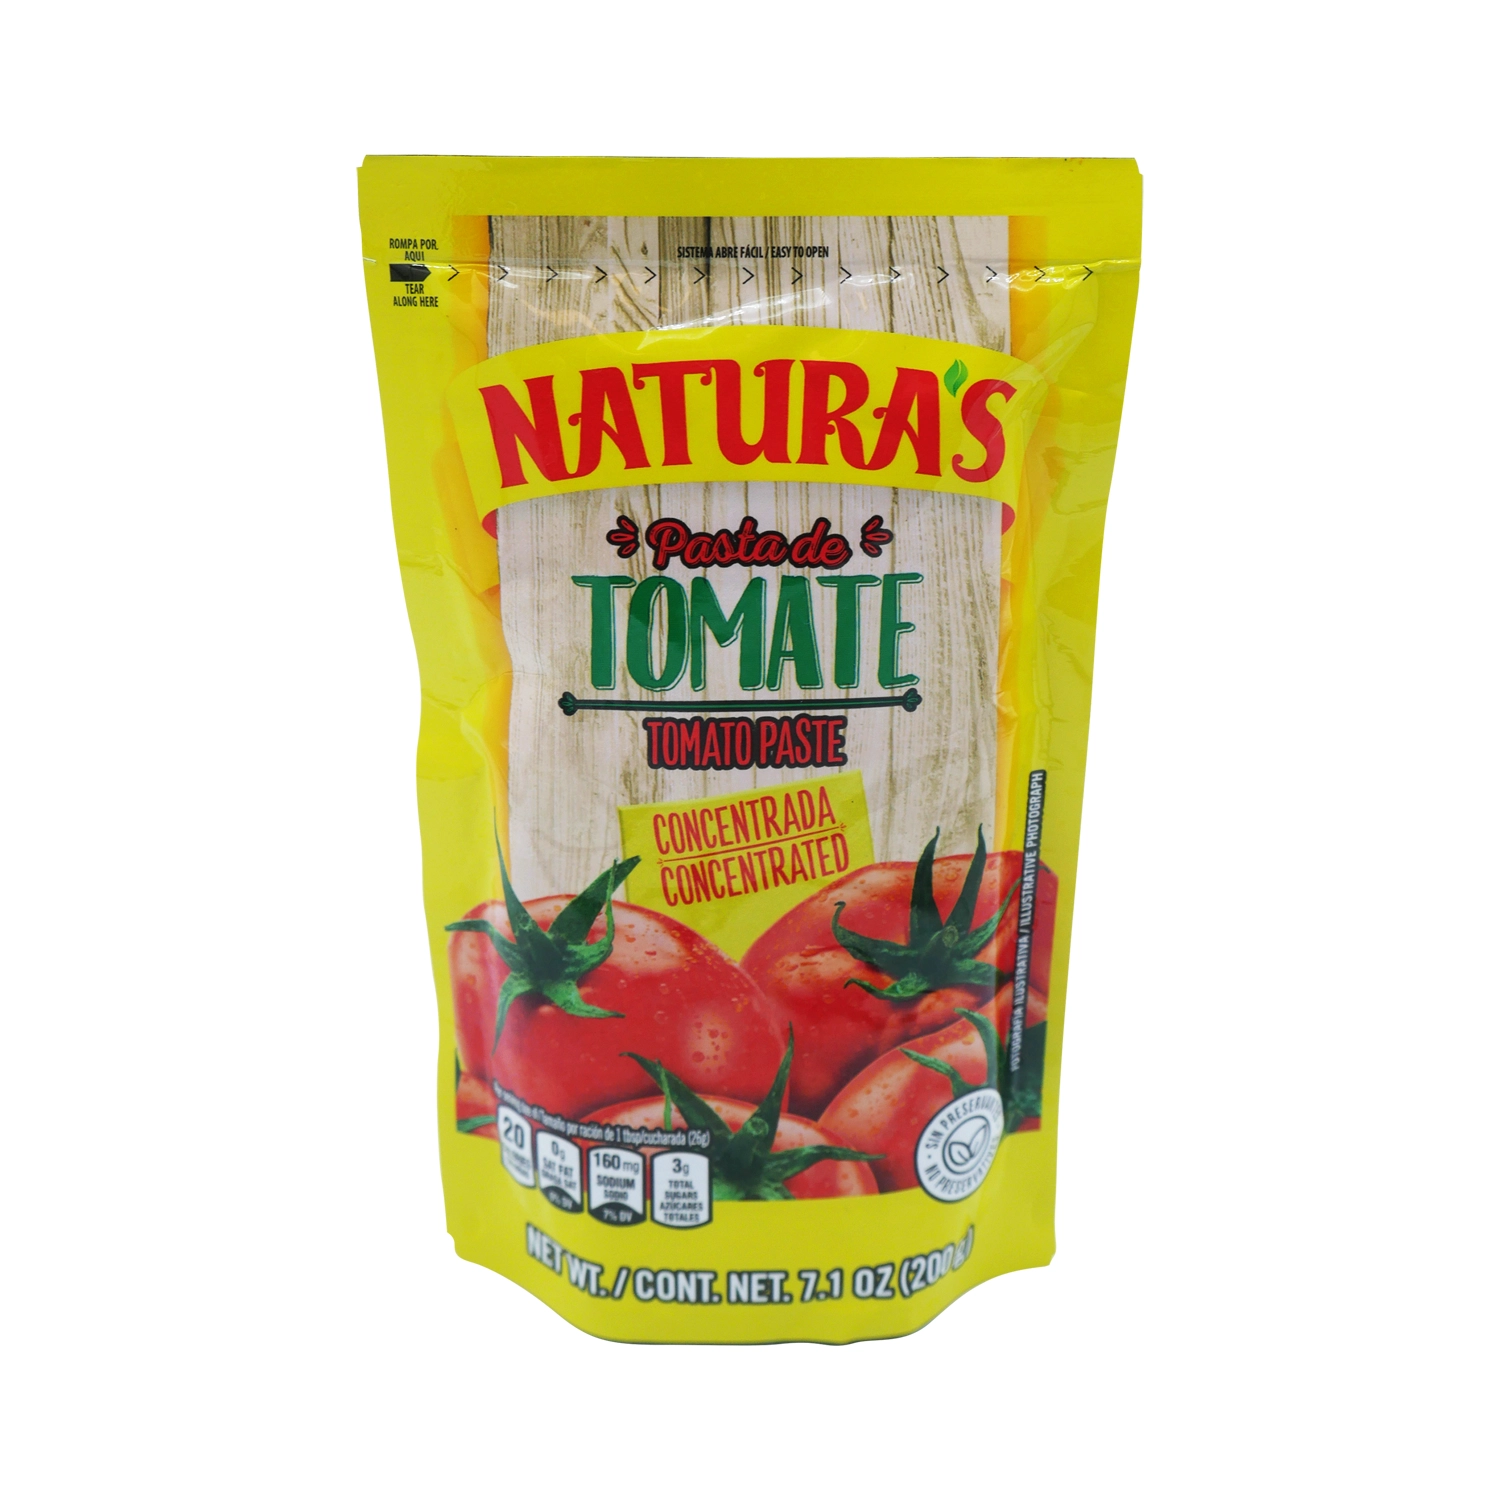 NATURAS Pasta de Tomate 24 or 200gr-7.1 oz